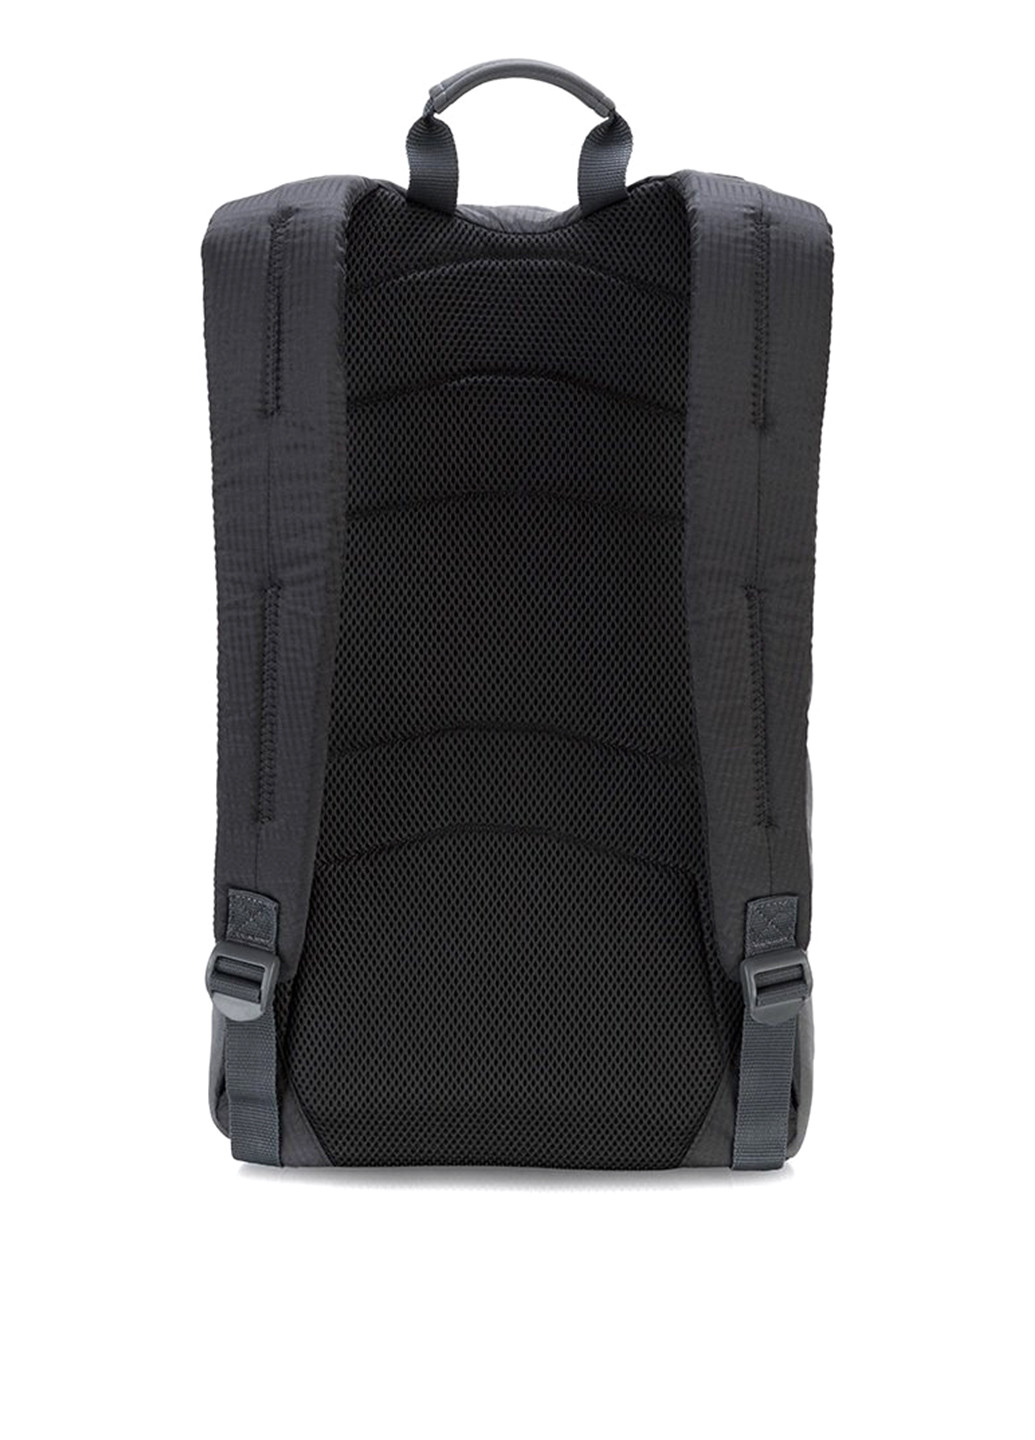 Рюкзак для ноутбука ThinkPad Active Backpack Medium (Black) Lenovo 4x40l45611 (133591057)